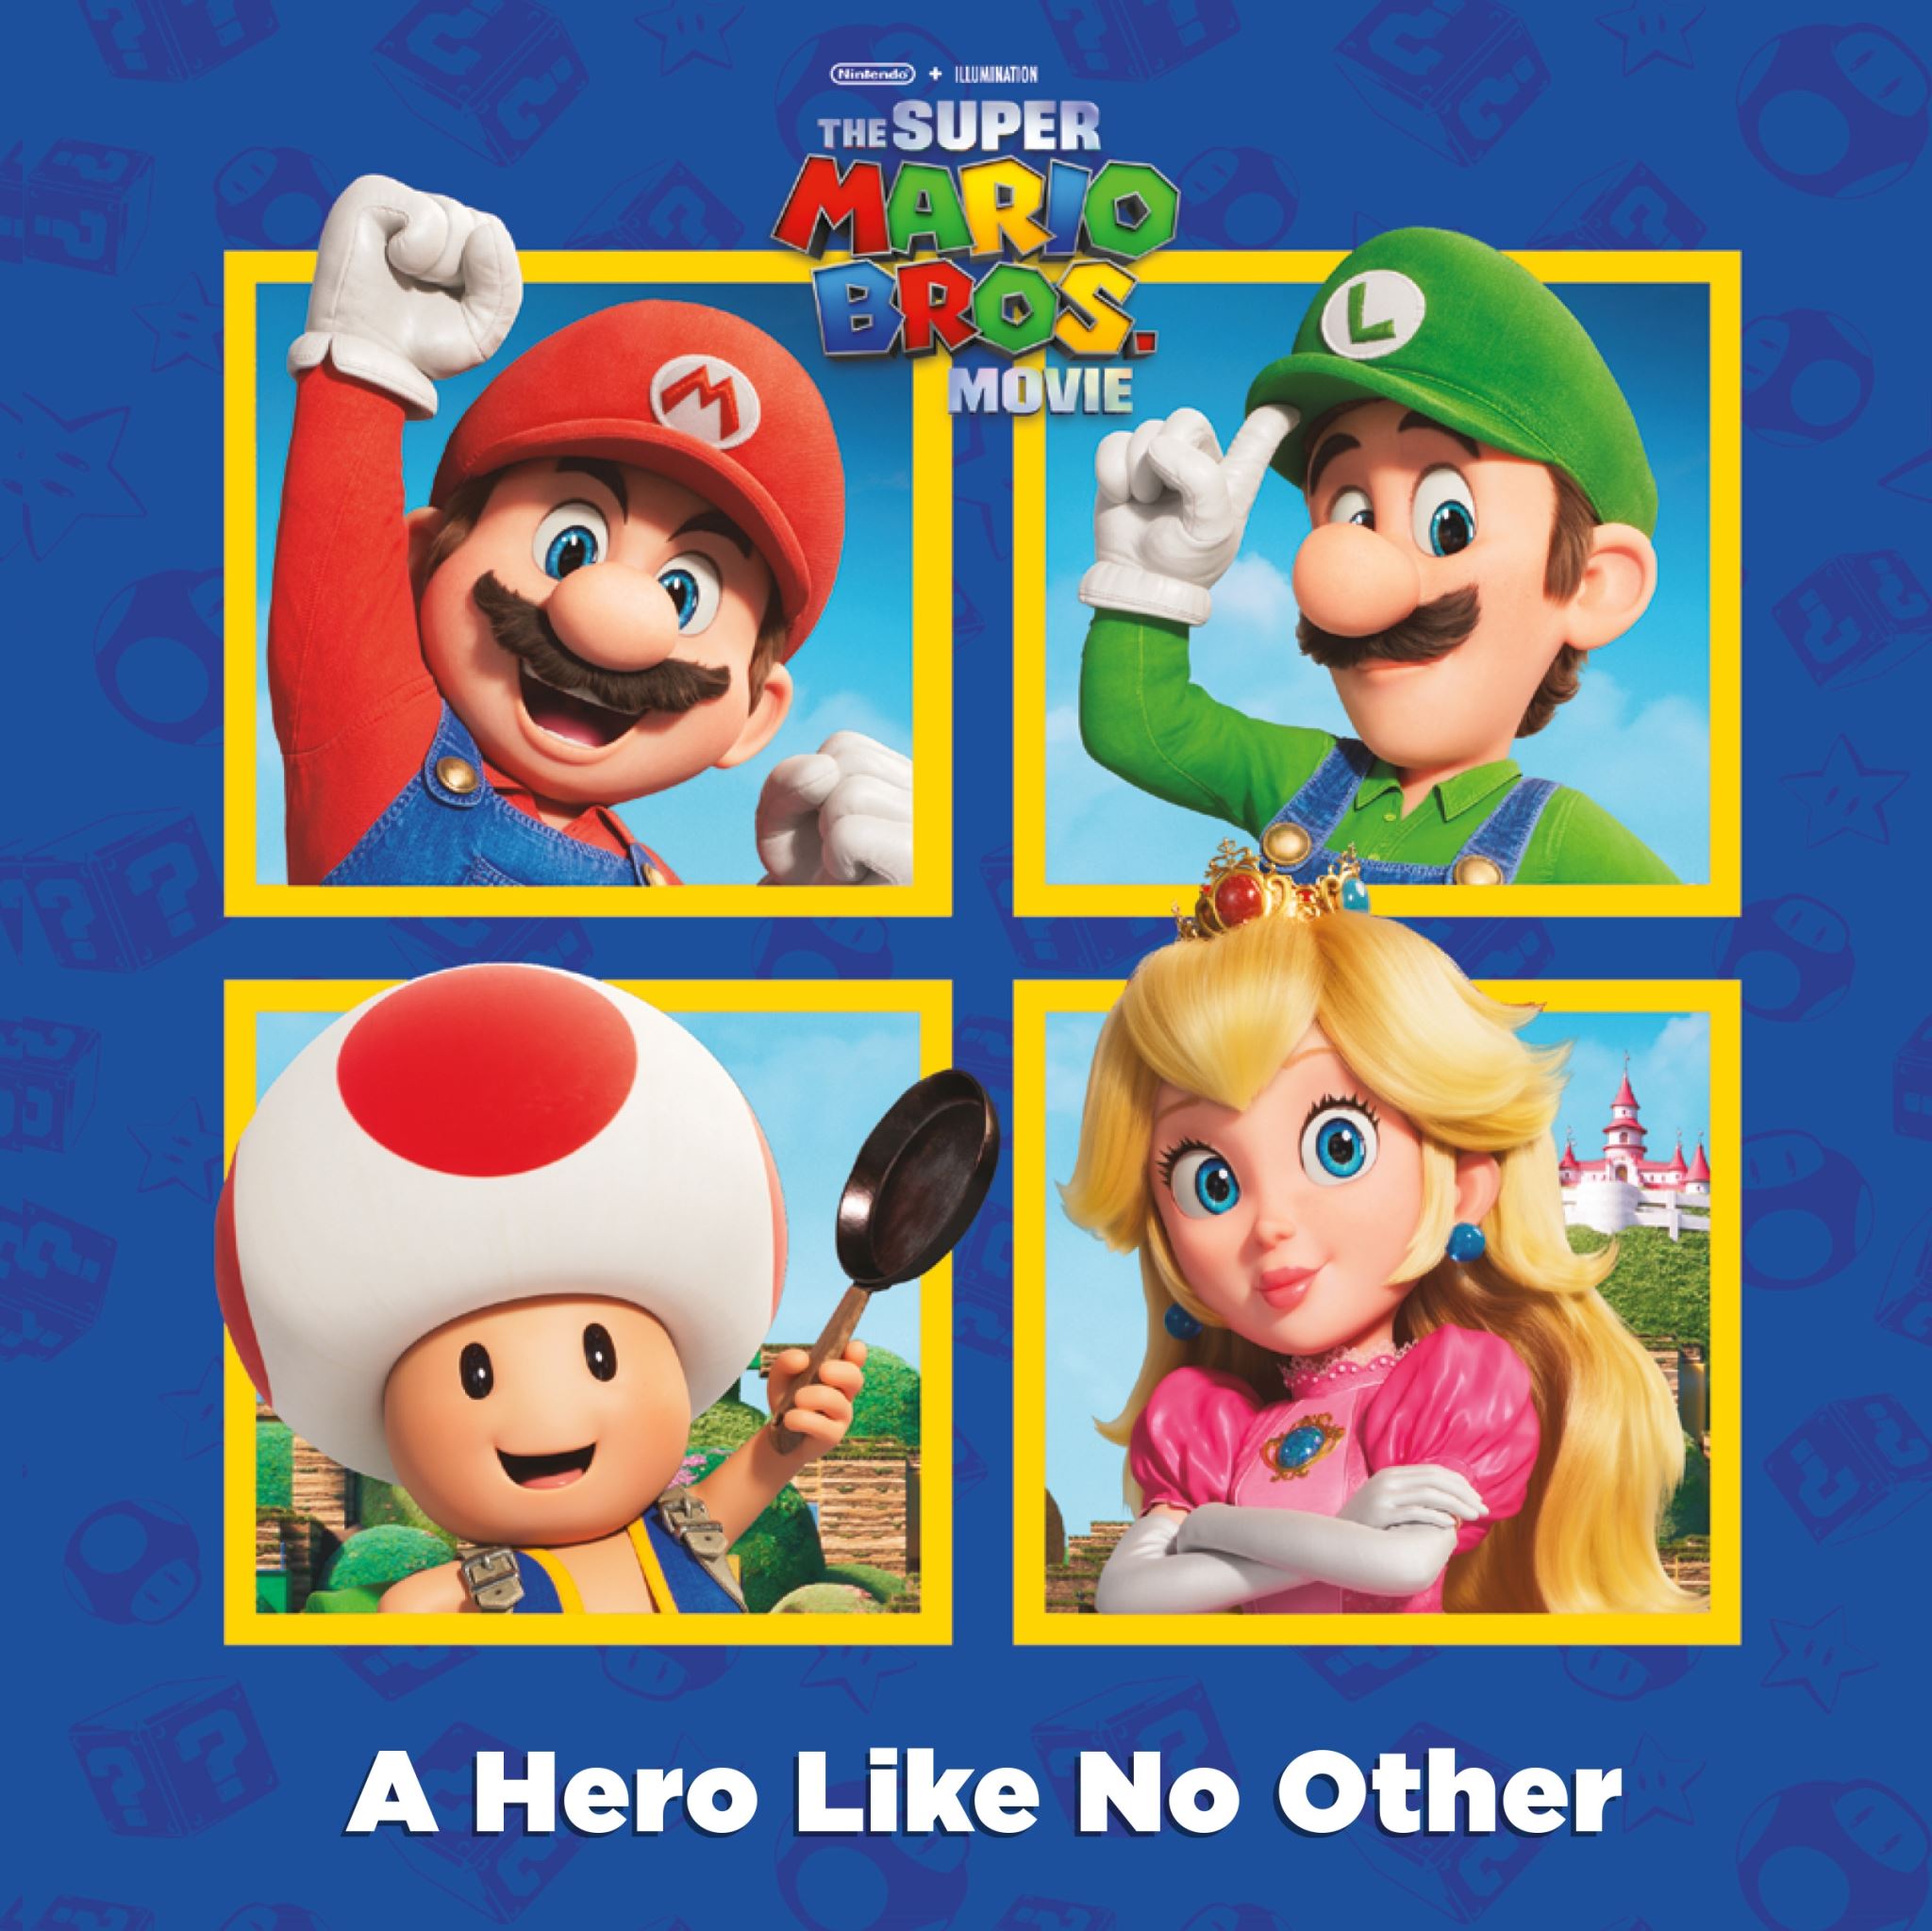 A Hero Like No Other (Nintendo® and Illumination present The Super Mario Bros. M